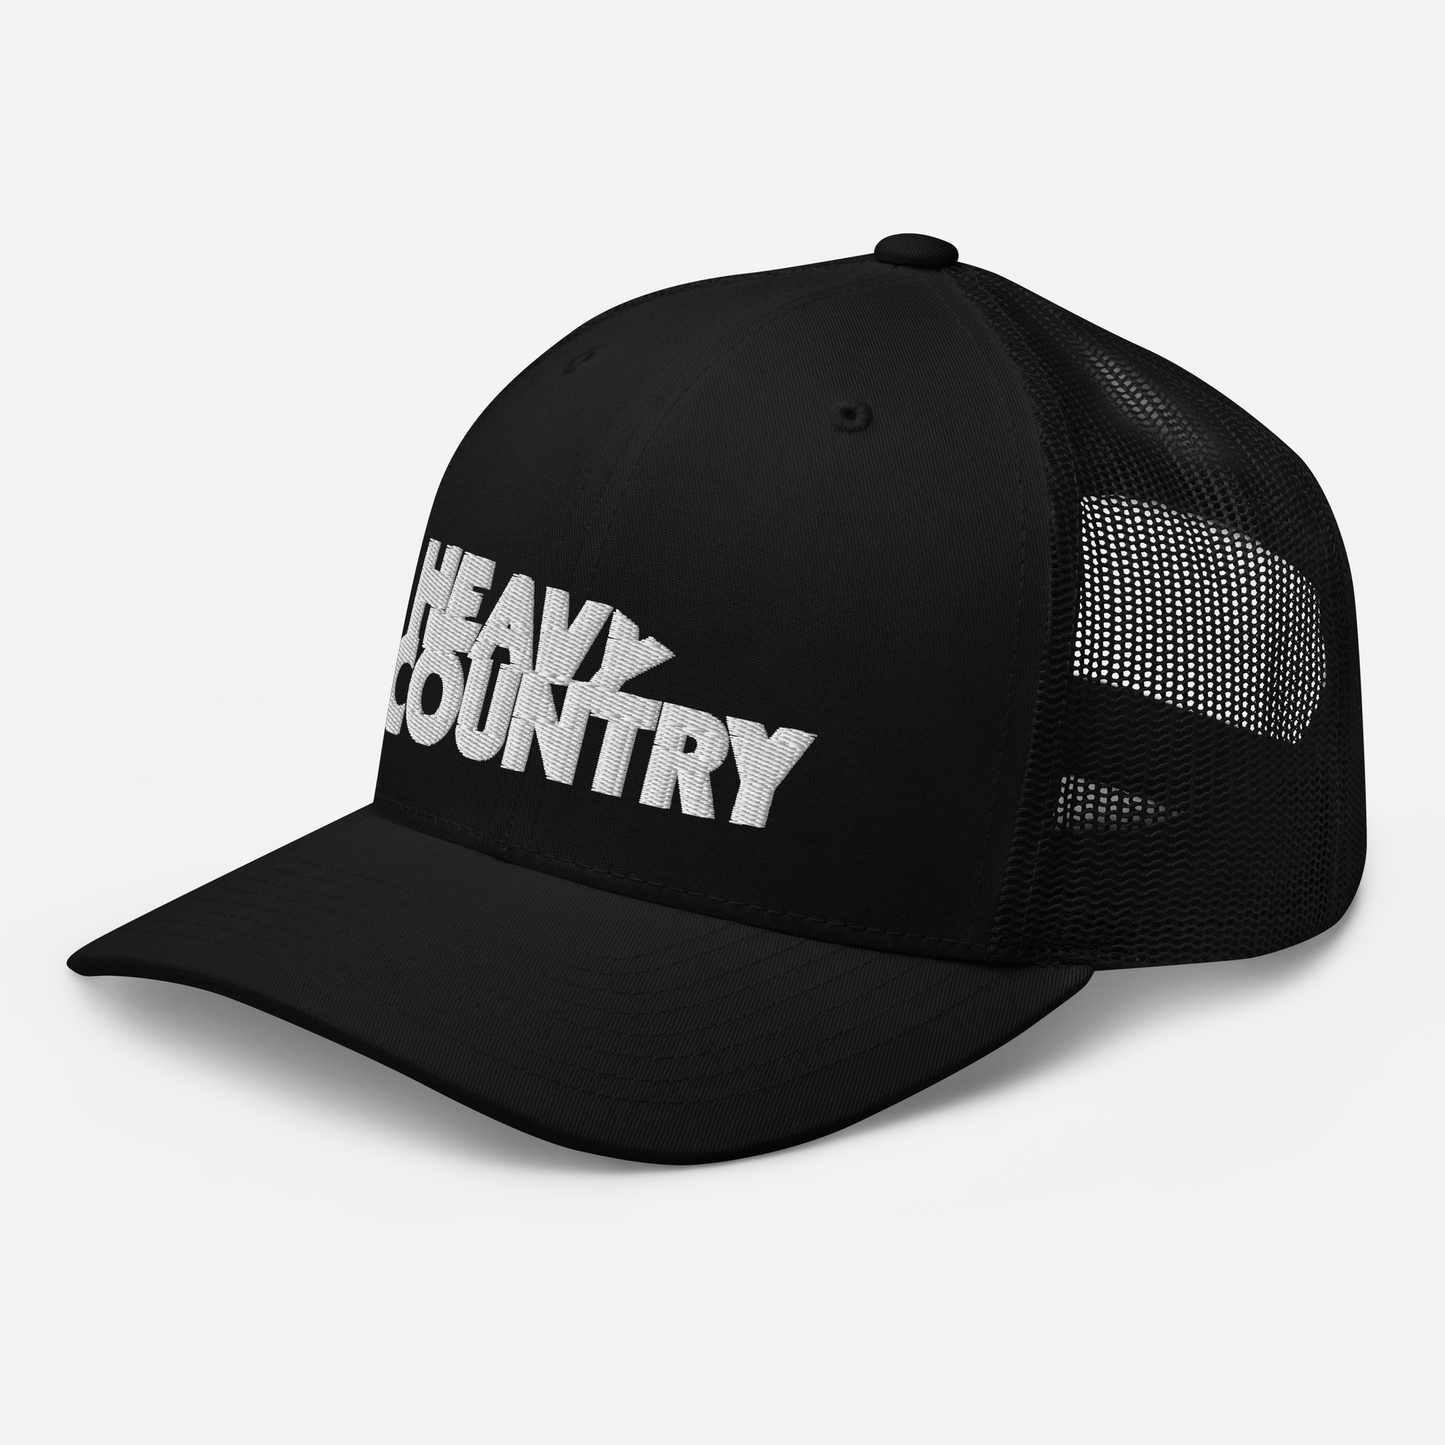 Heavy Country Trucker Cap